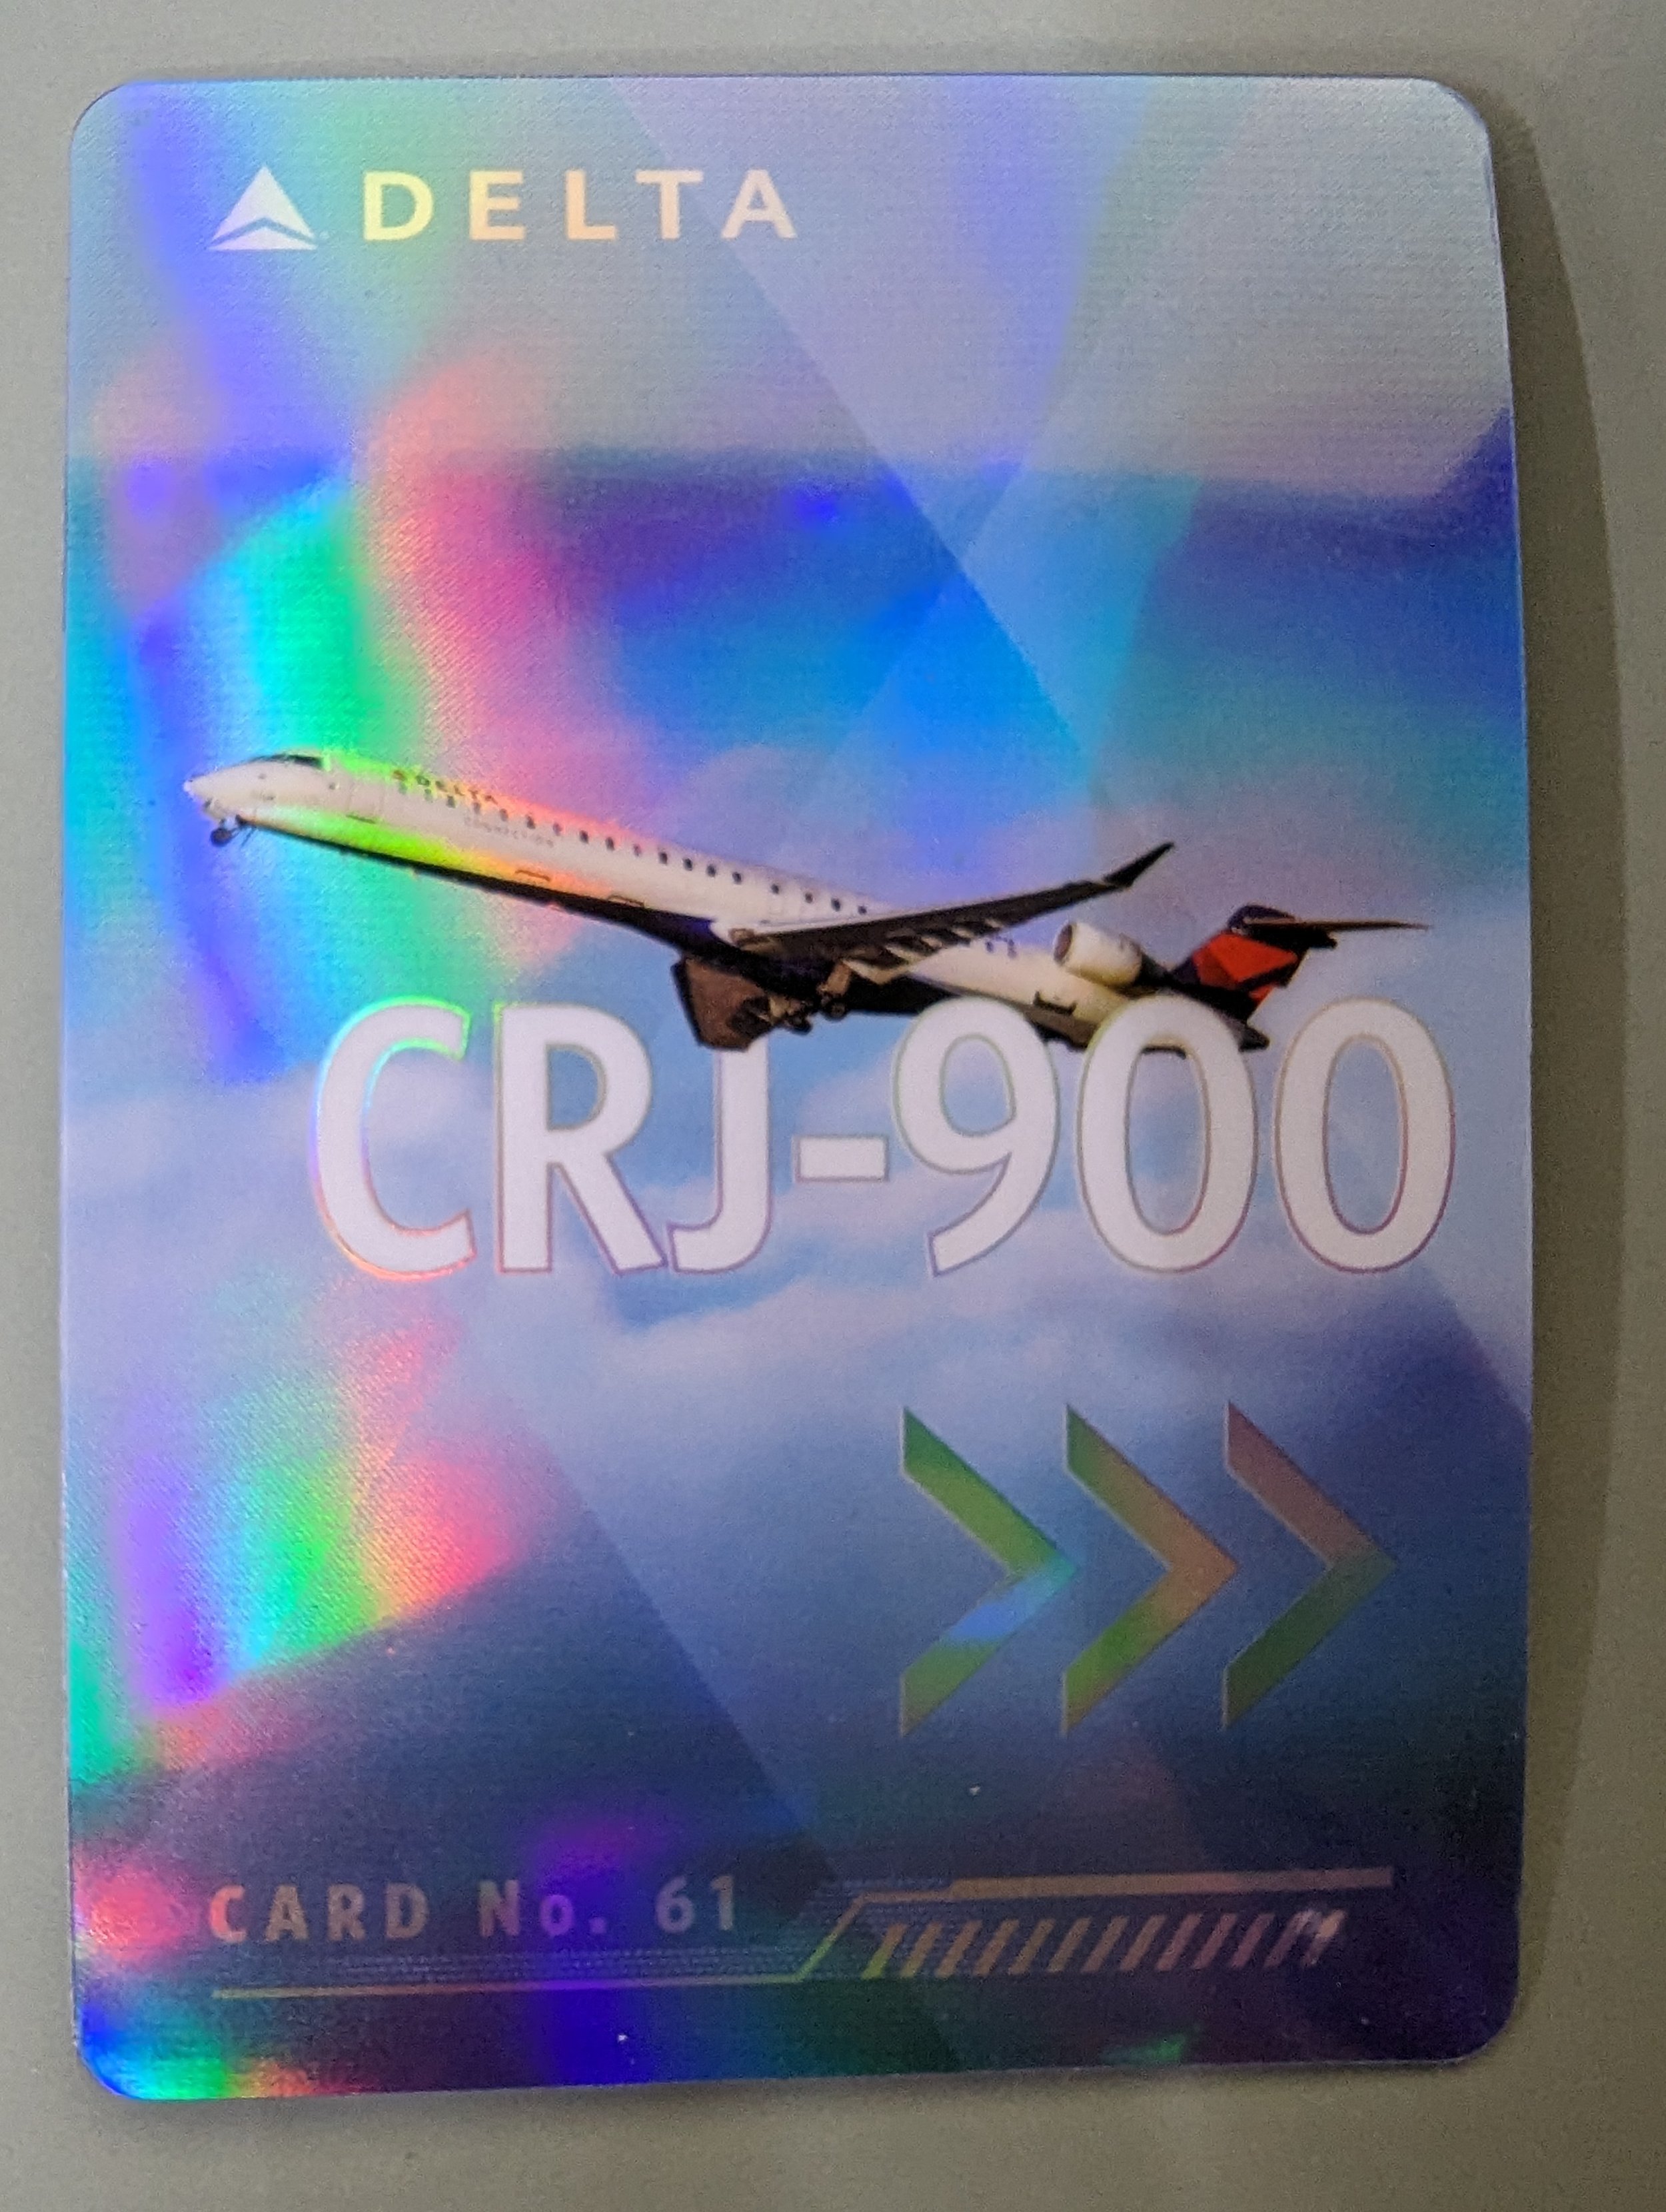 2016 Card #61 CRJ-900